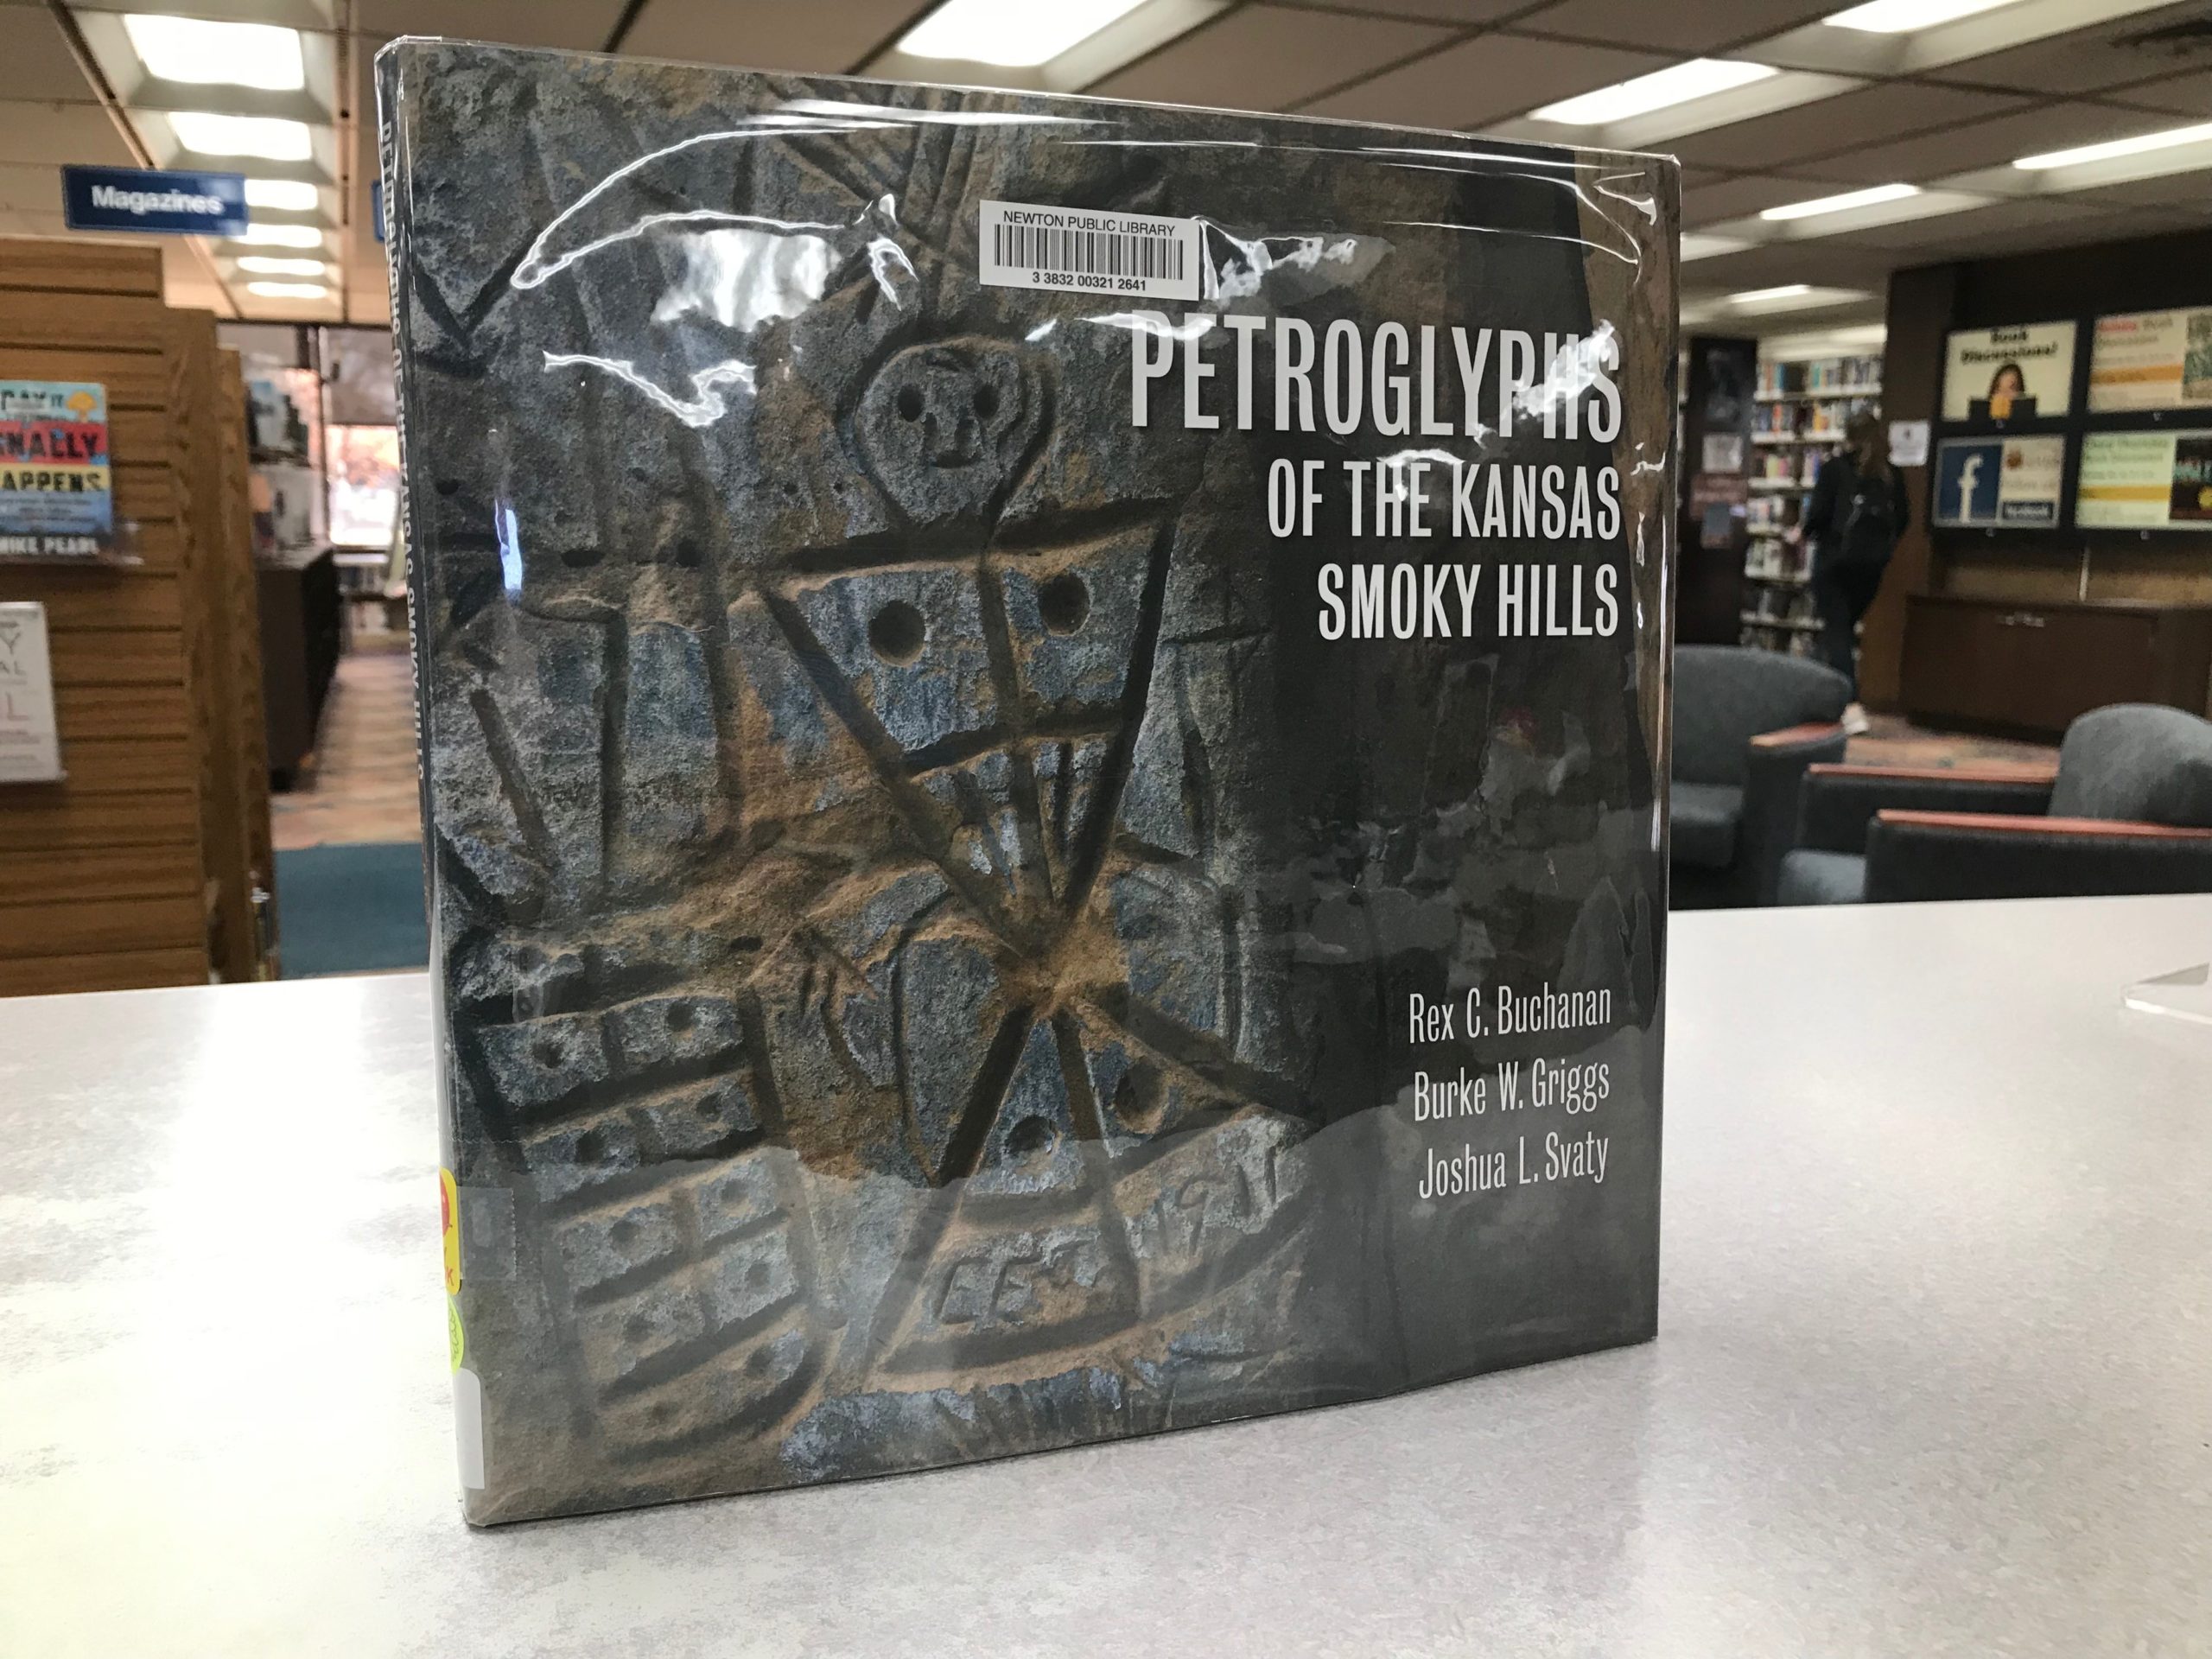 Photo of the book, "Petroglyphs of the Kansas Smoky Hills."